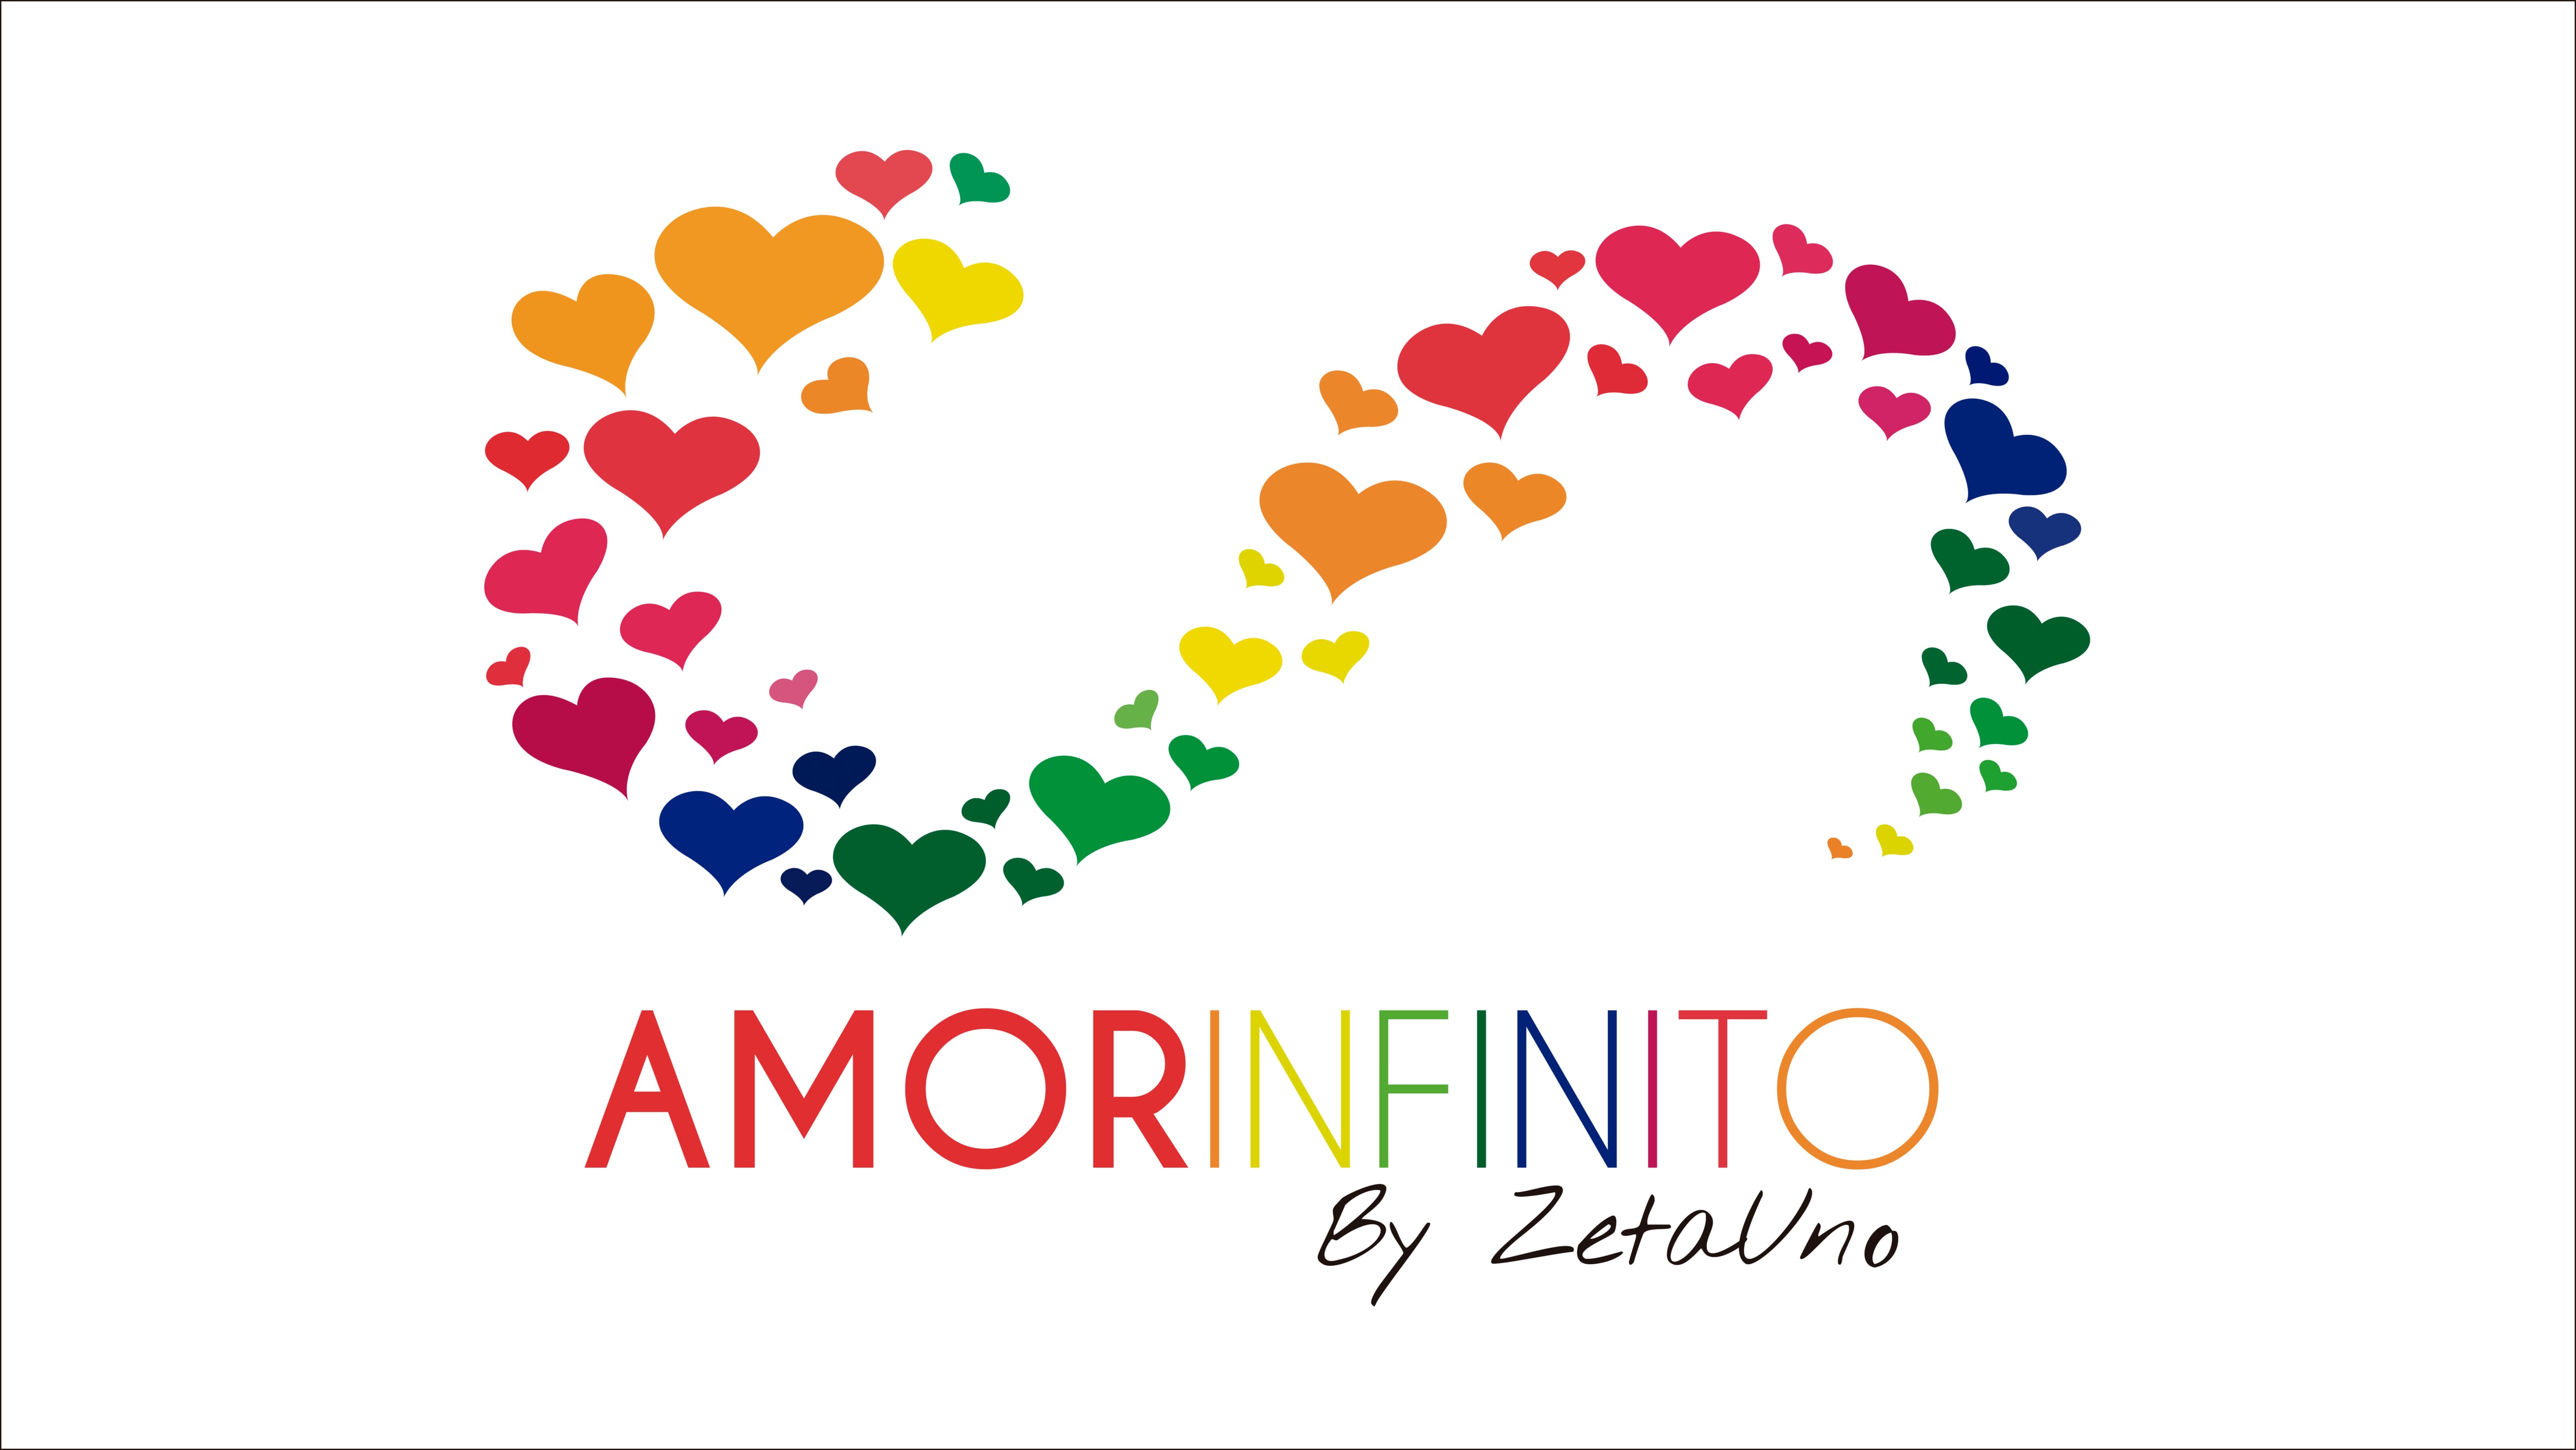 Amor Infinito by zeta uno